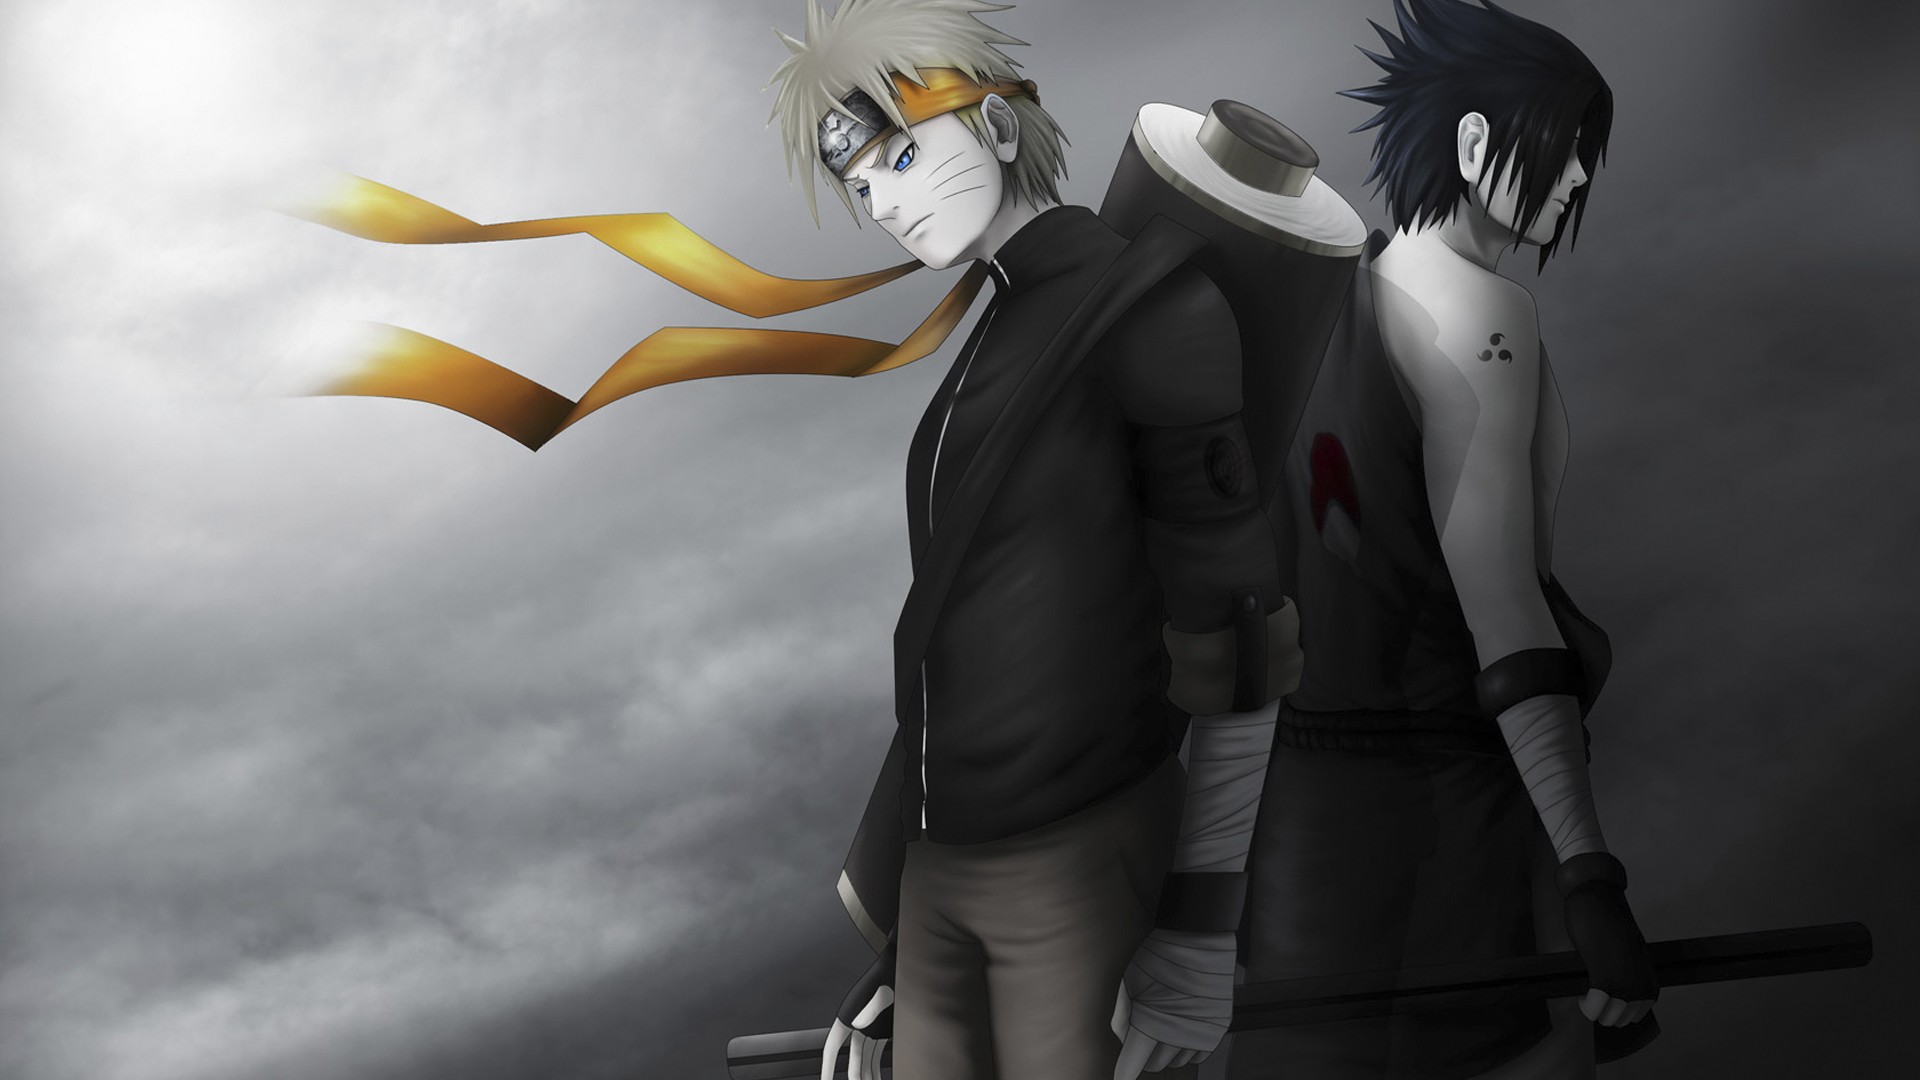 New Naruto Wallpaper Full HD And Sasuke